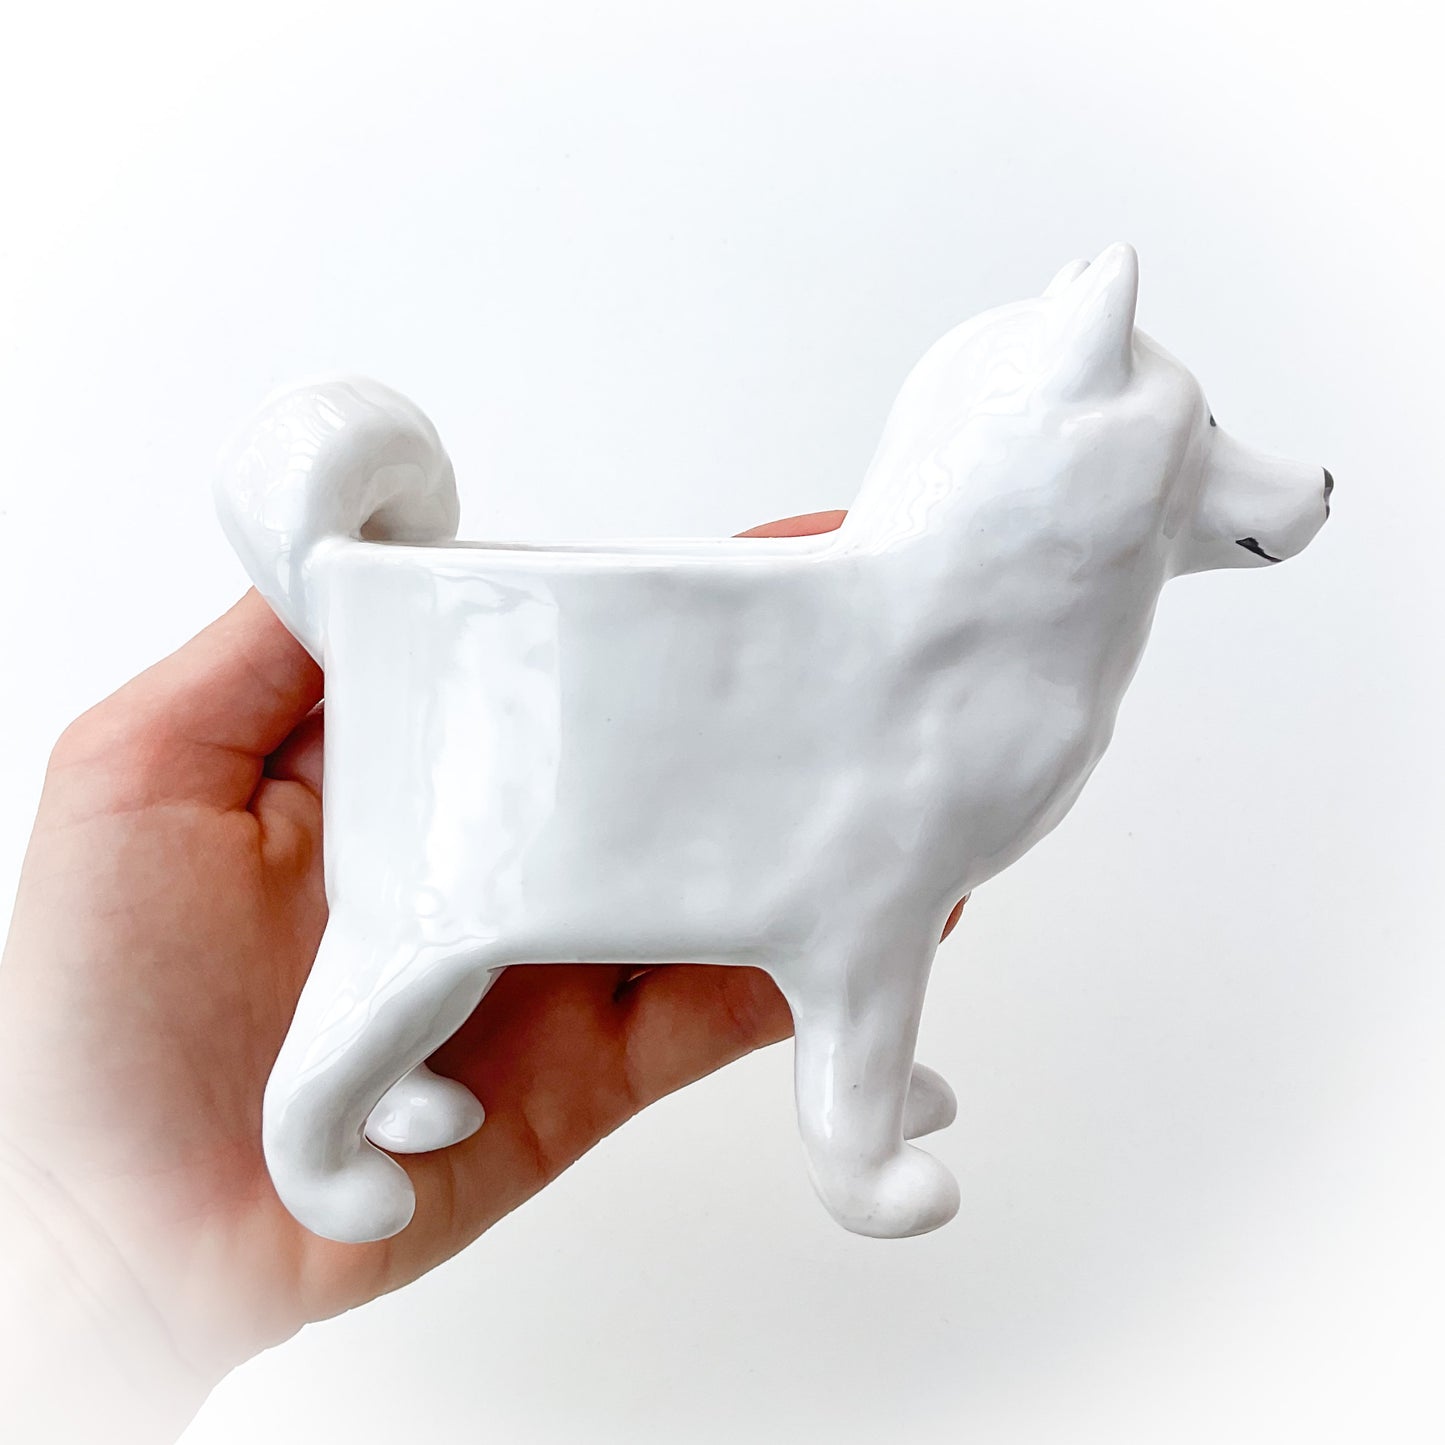 Samoyed Dog Planter - Ceramic Dog Plant Pot